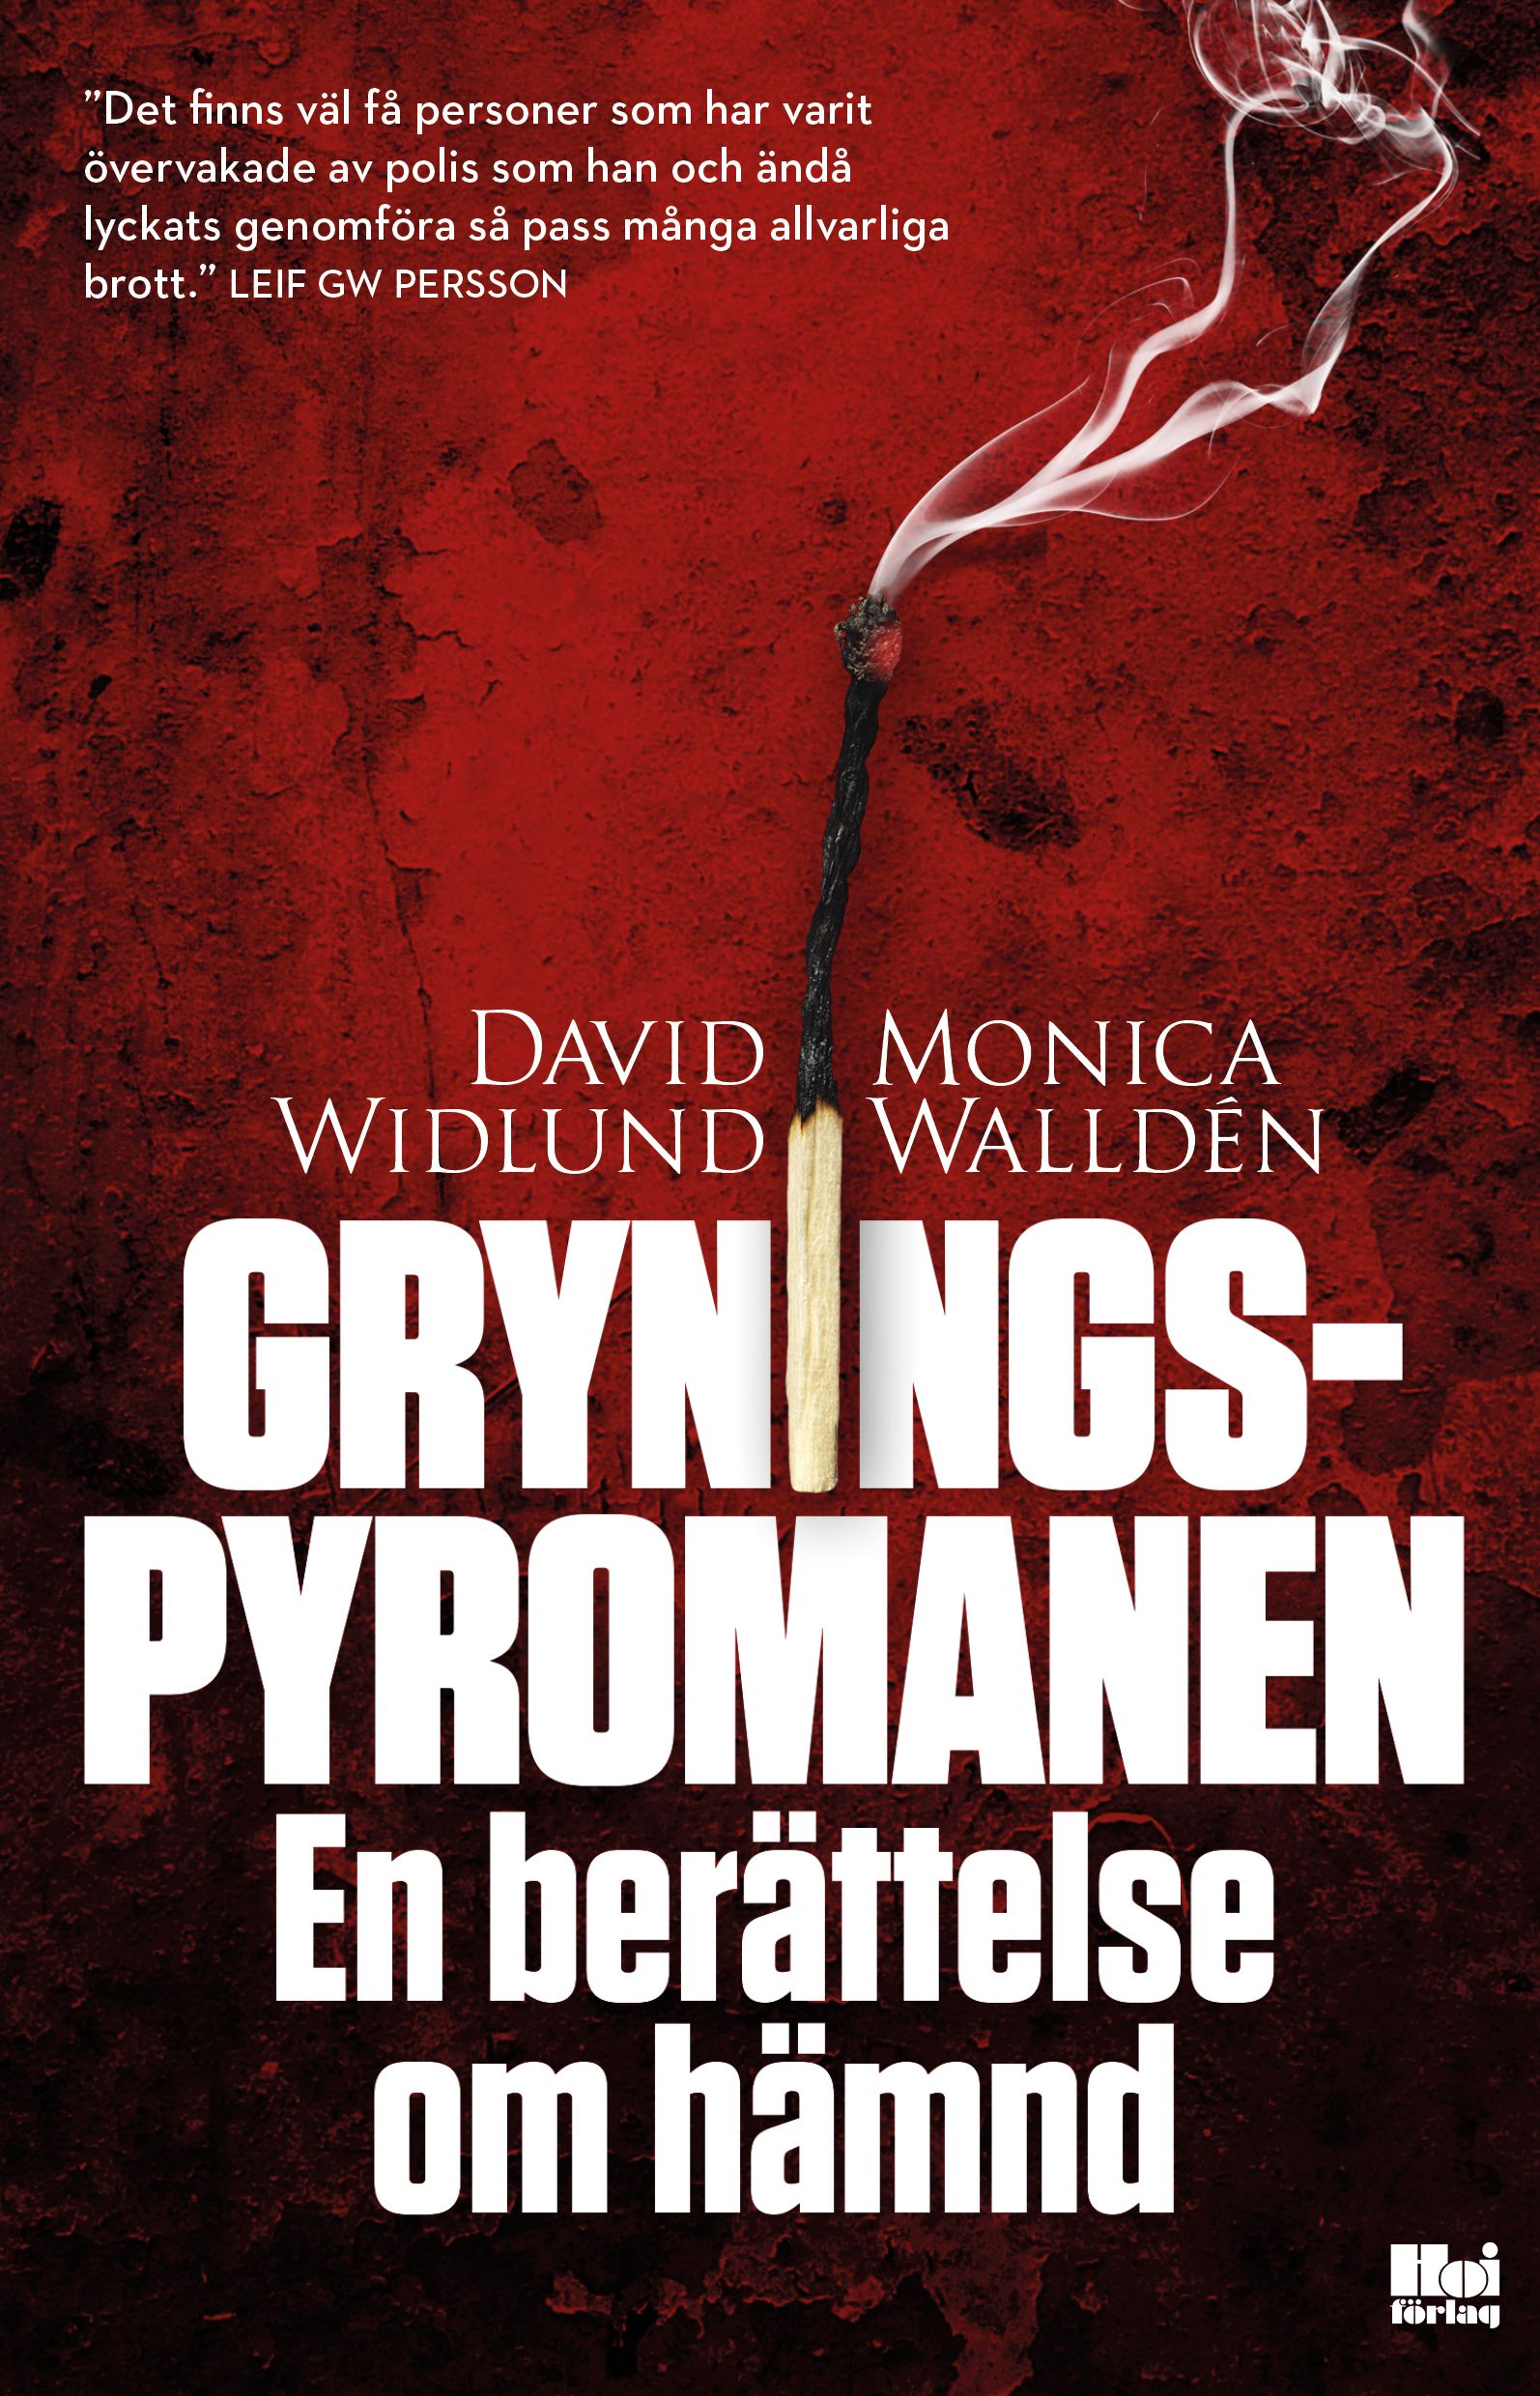 Gryningspyromanen: En berättelse om hämnd, e-bog af Monica Walldén, David Widlund